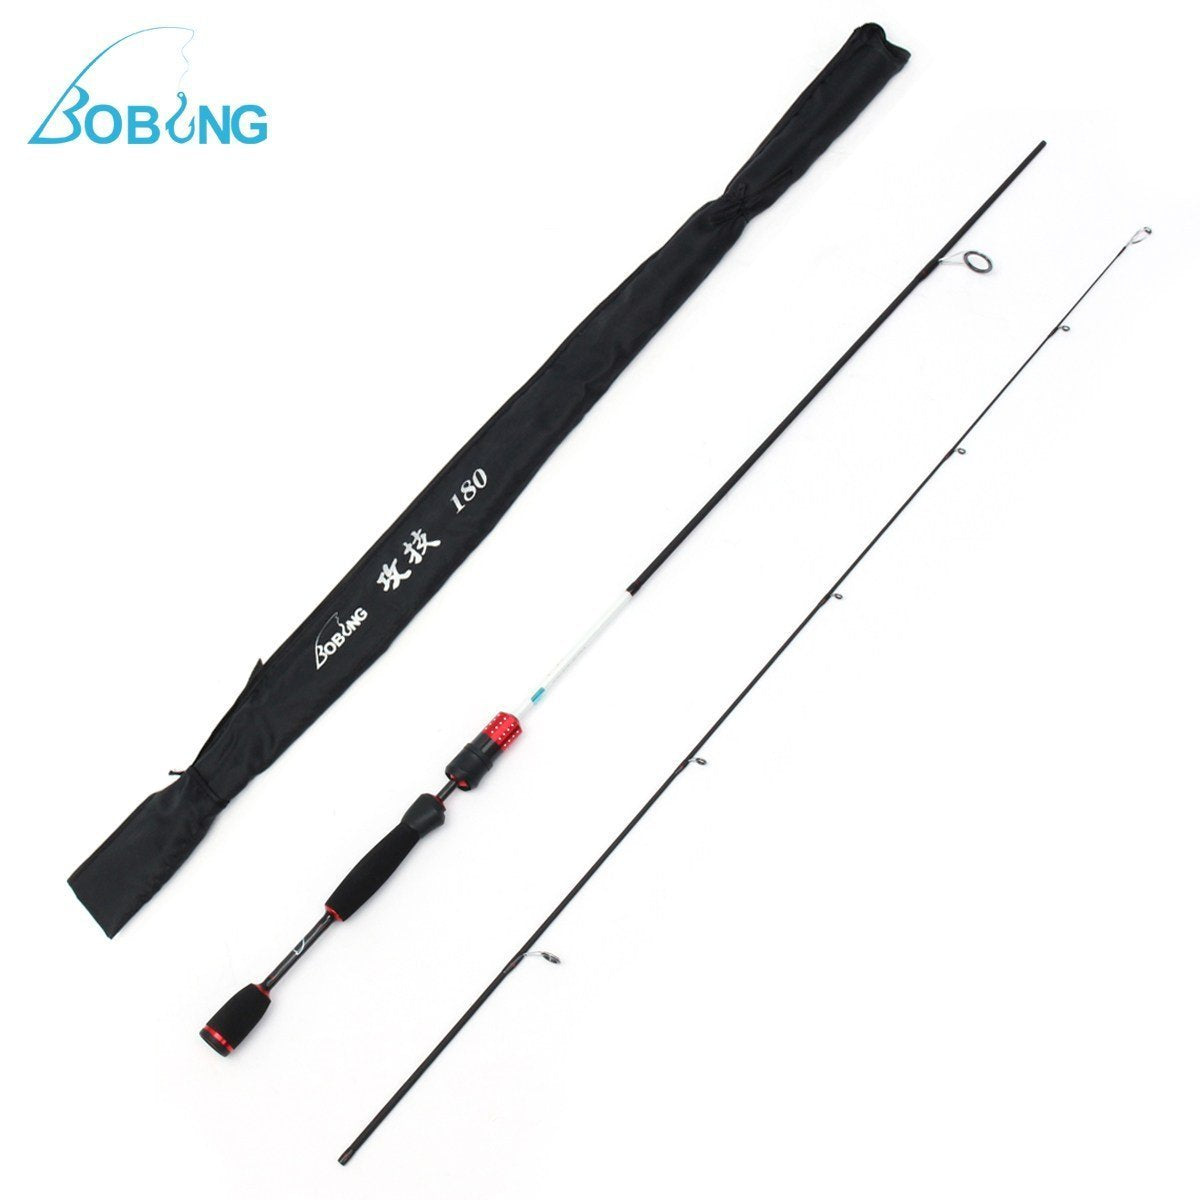 Bobing Gk-602 1.8M Carbon Fiber Soft Lure Fishing Rod 2 Section L Power Carp-Spinning Rods-Angler & Cyclist's Store-Bargain Bait Box